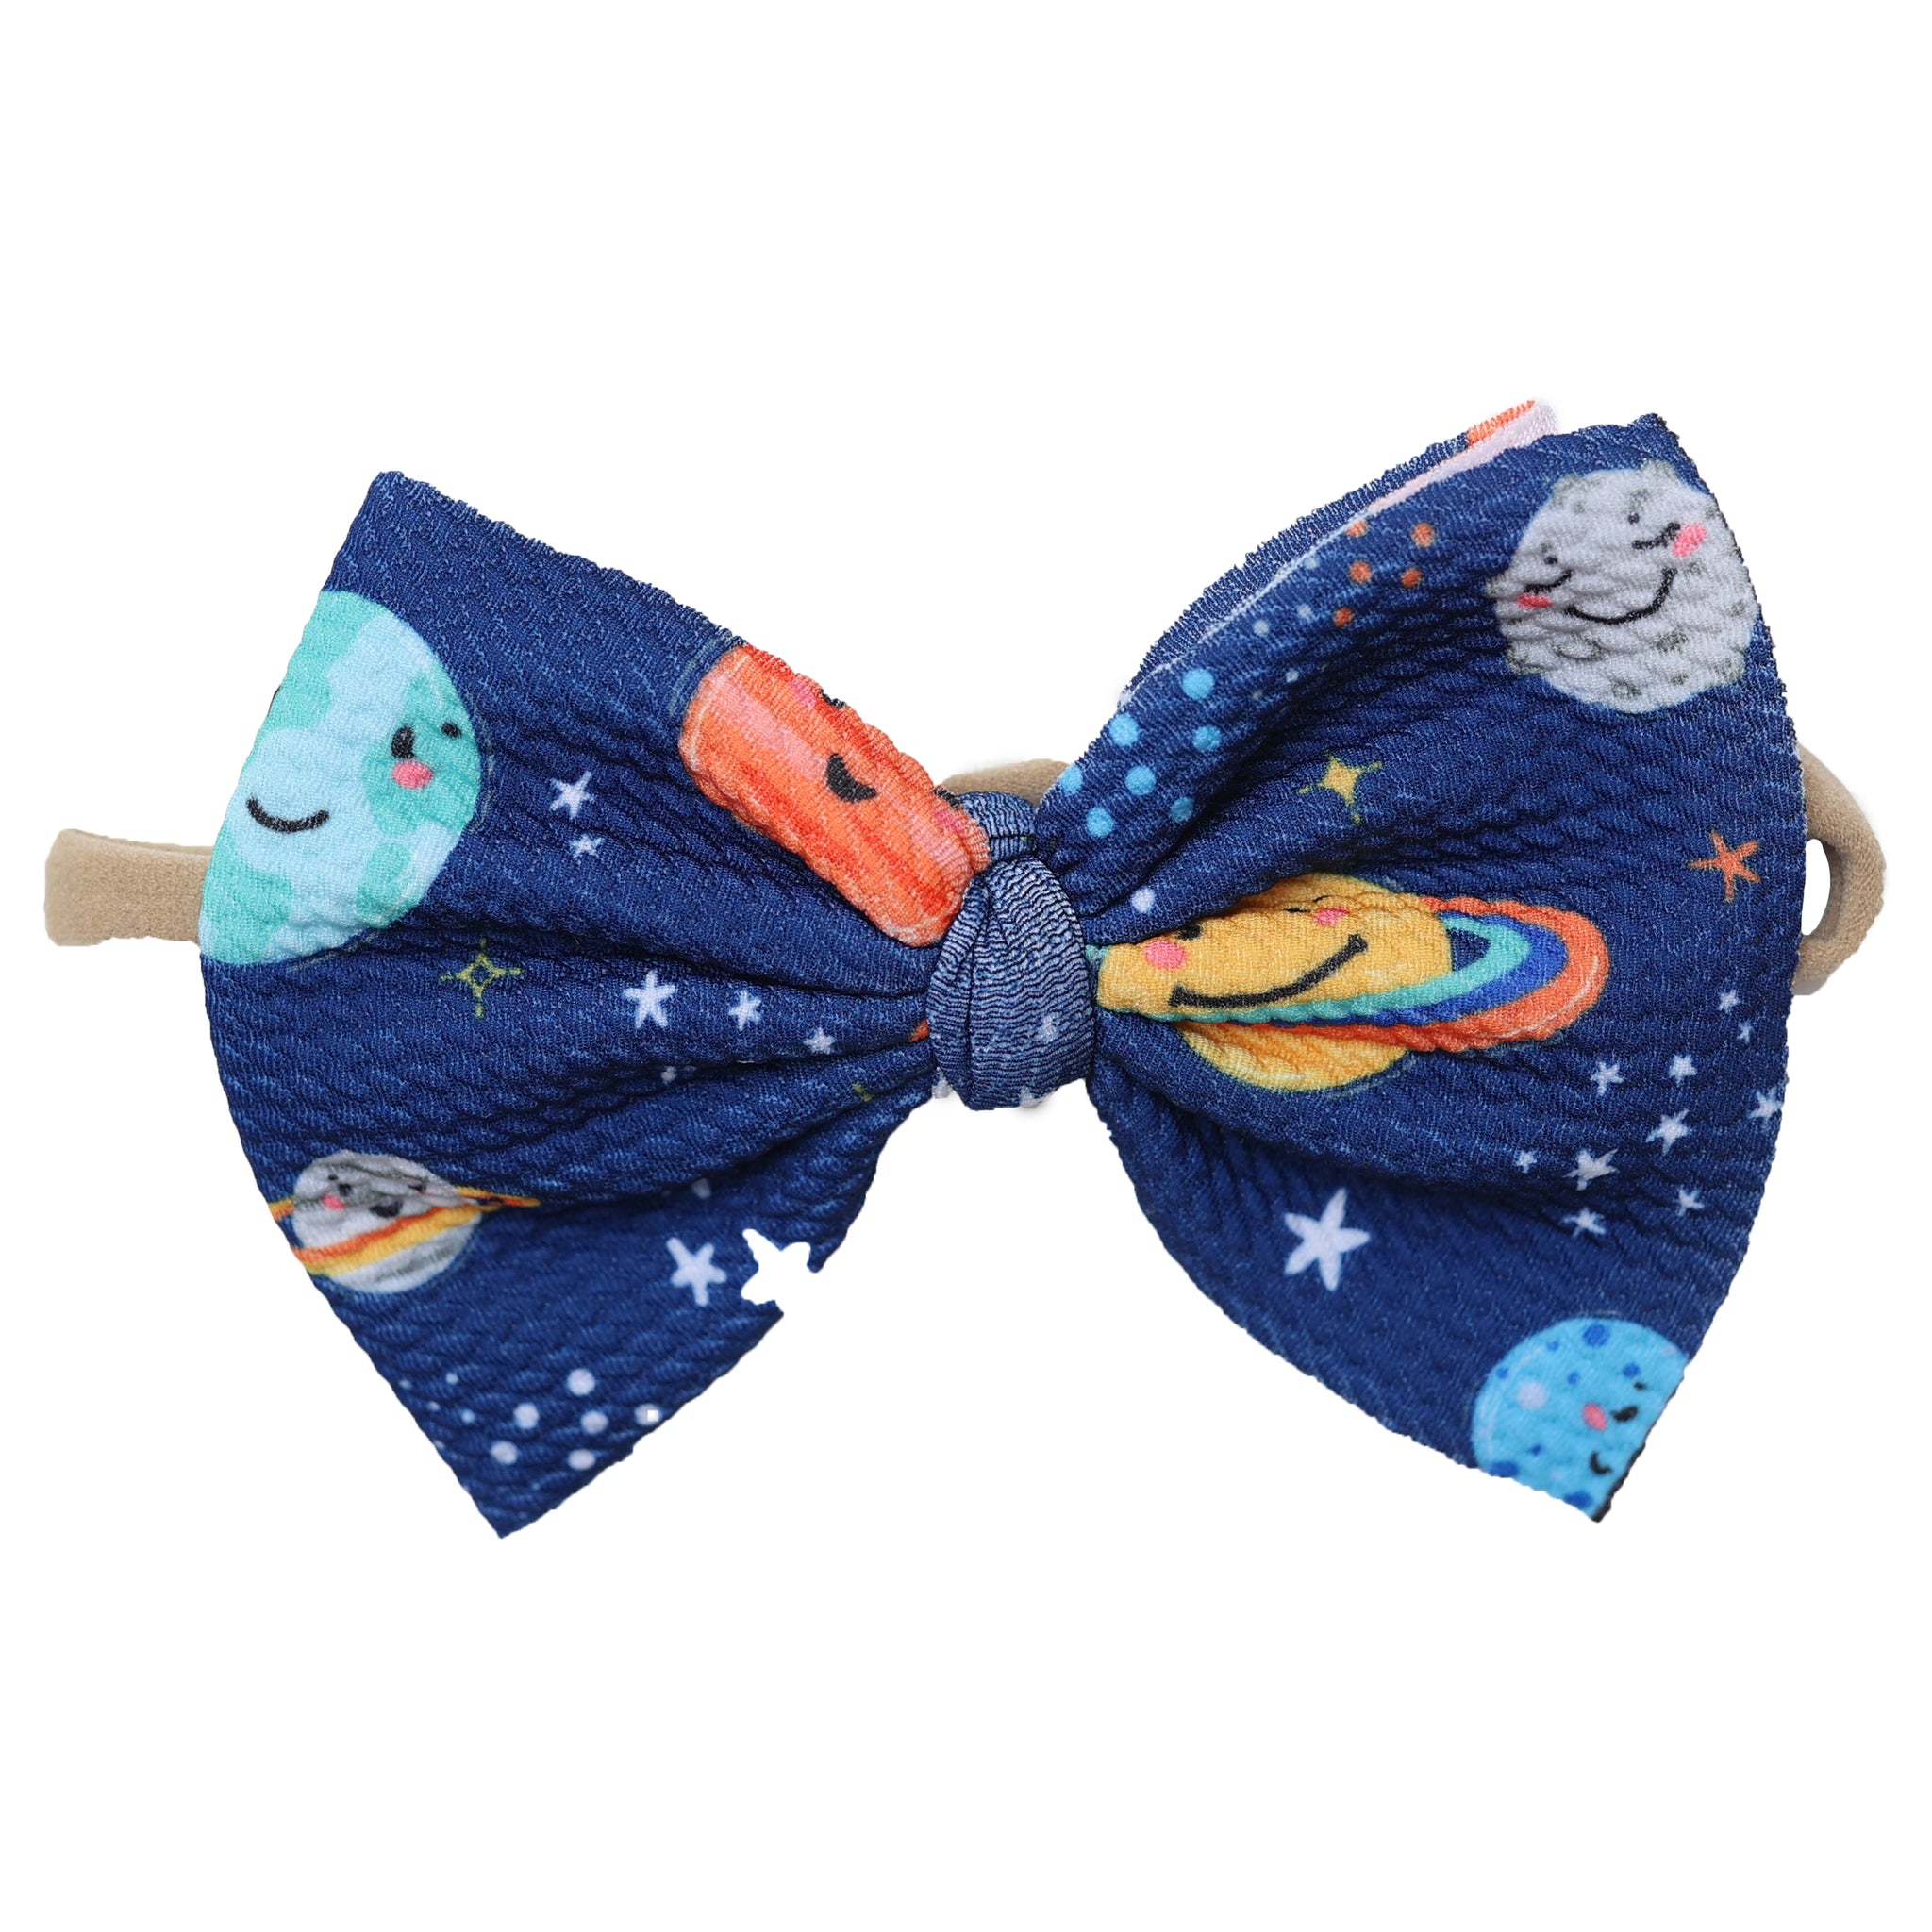 macaron+me Peaceful Planets Stretchy Bow Headband